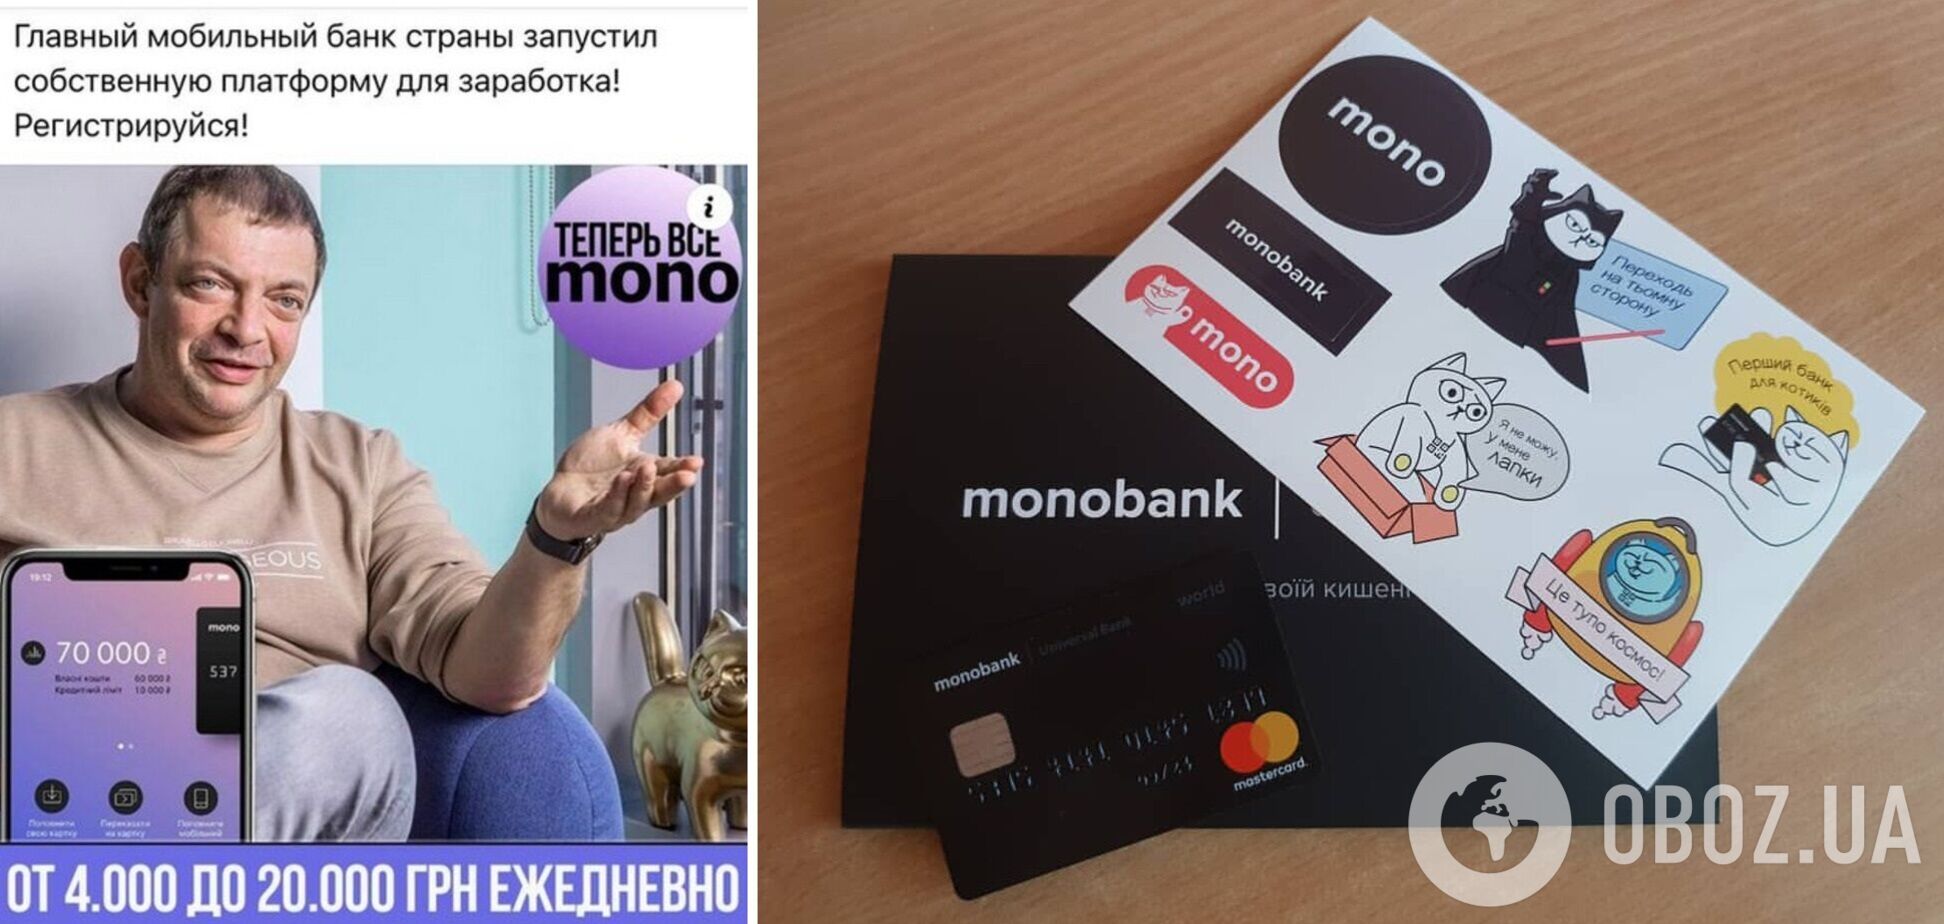  Monobank предупредил о мошенниках